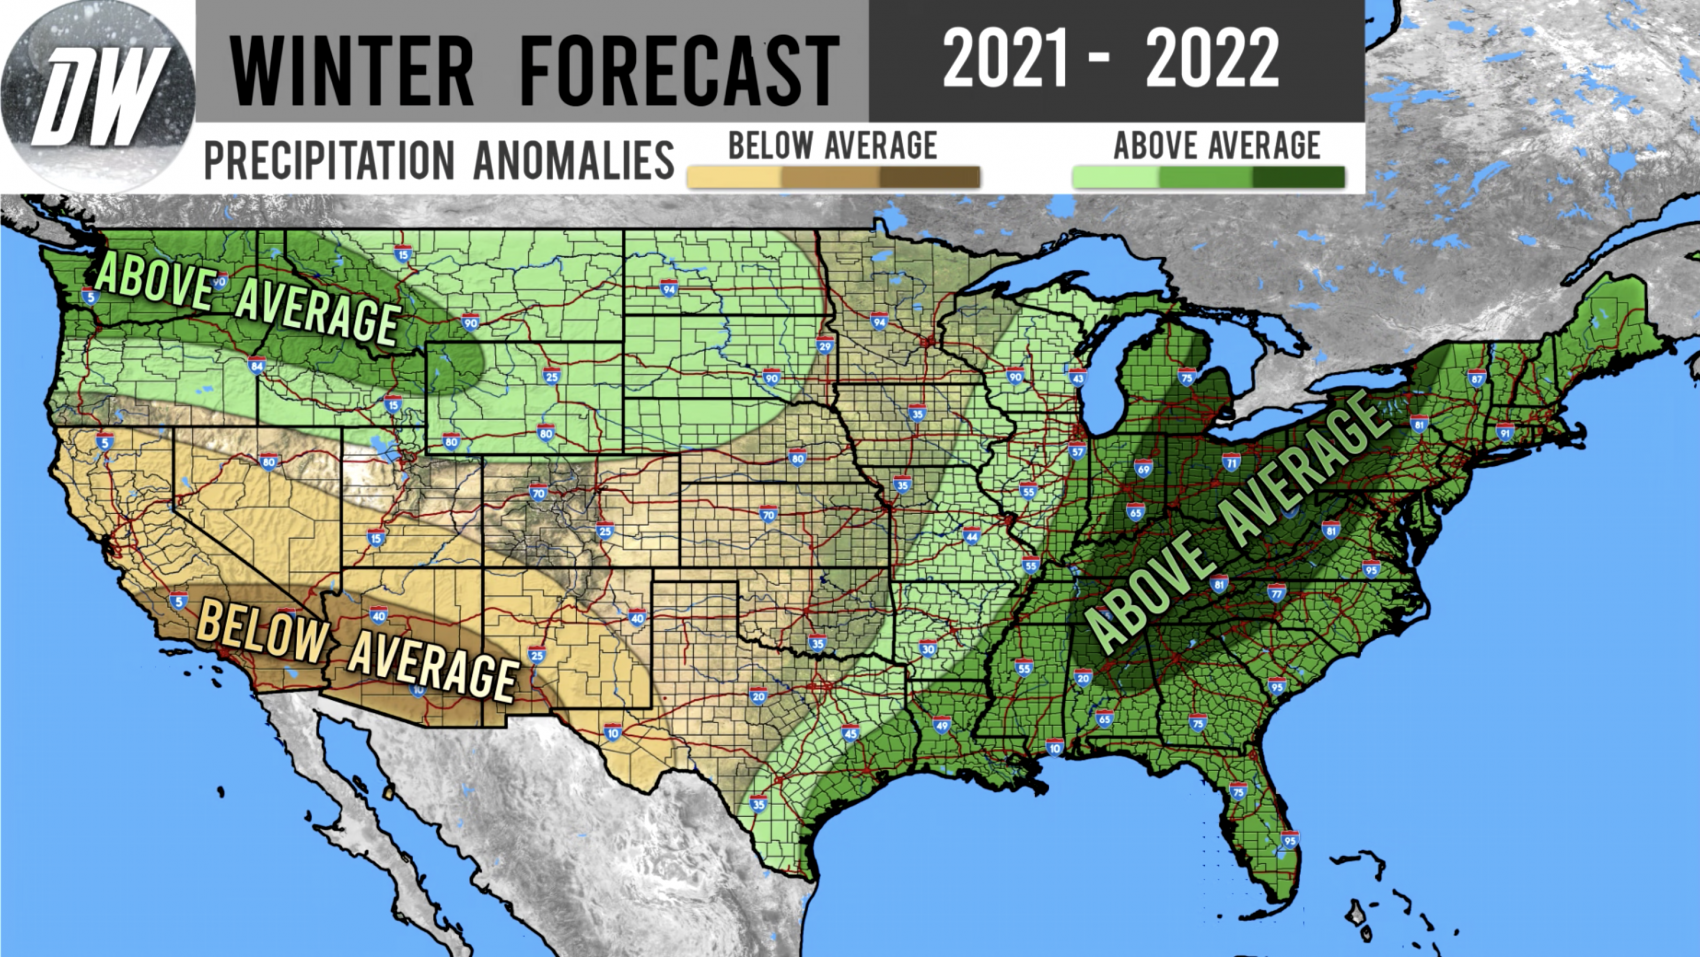 Direct Weather Shares 2021-2022 Winter Forecast - SnowBrains